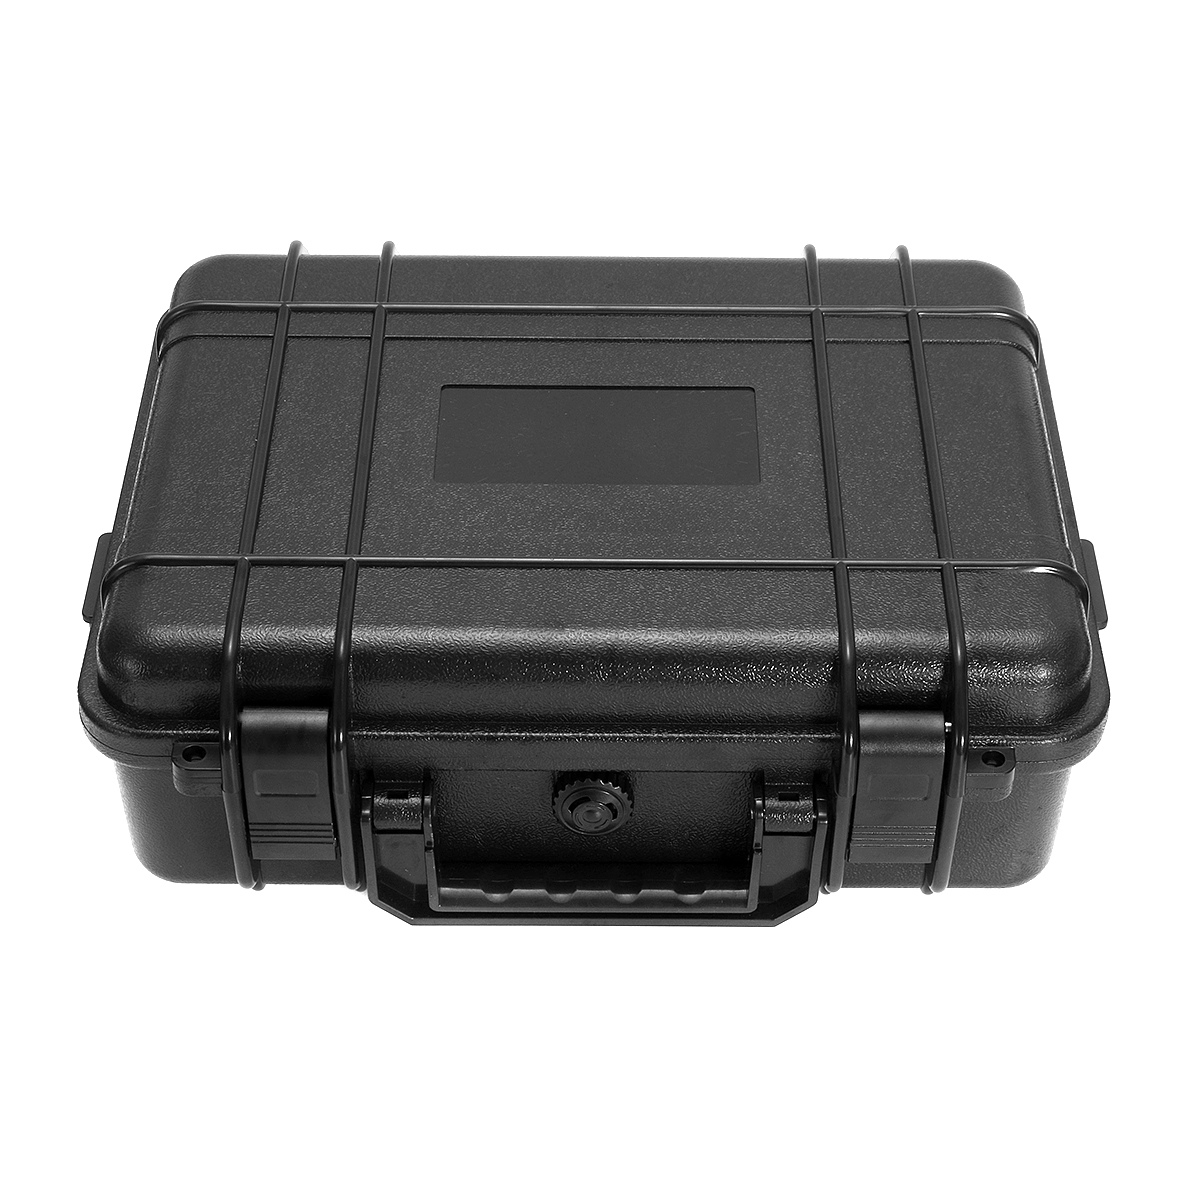 Waterproof-Hard-Carry-Case-Tool-Box-Plastic-Equipment-Protective-Storage-Box-1301589-9